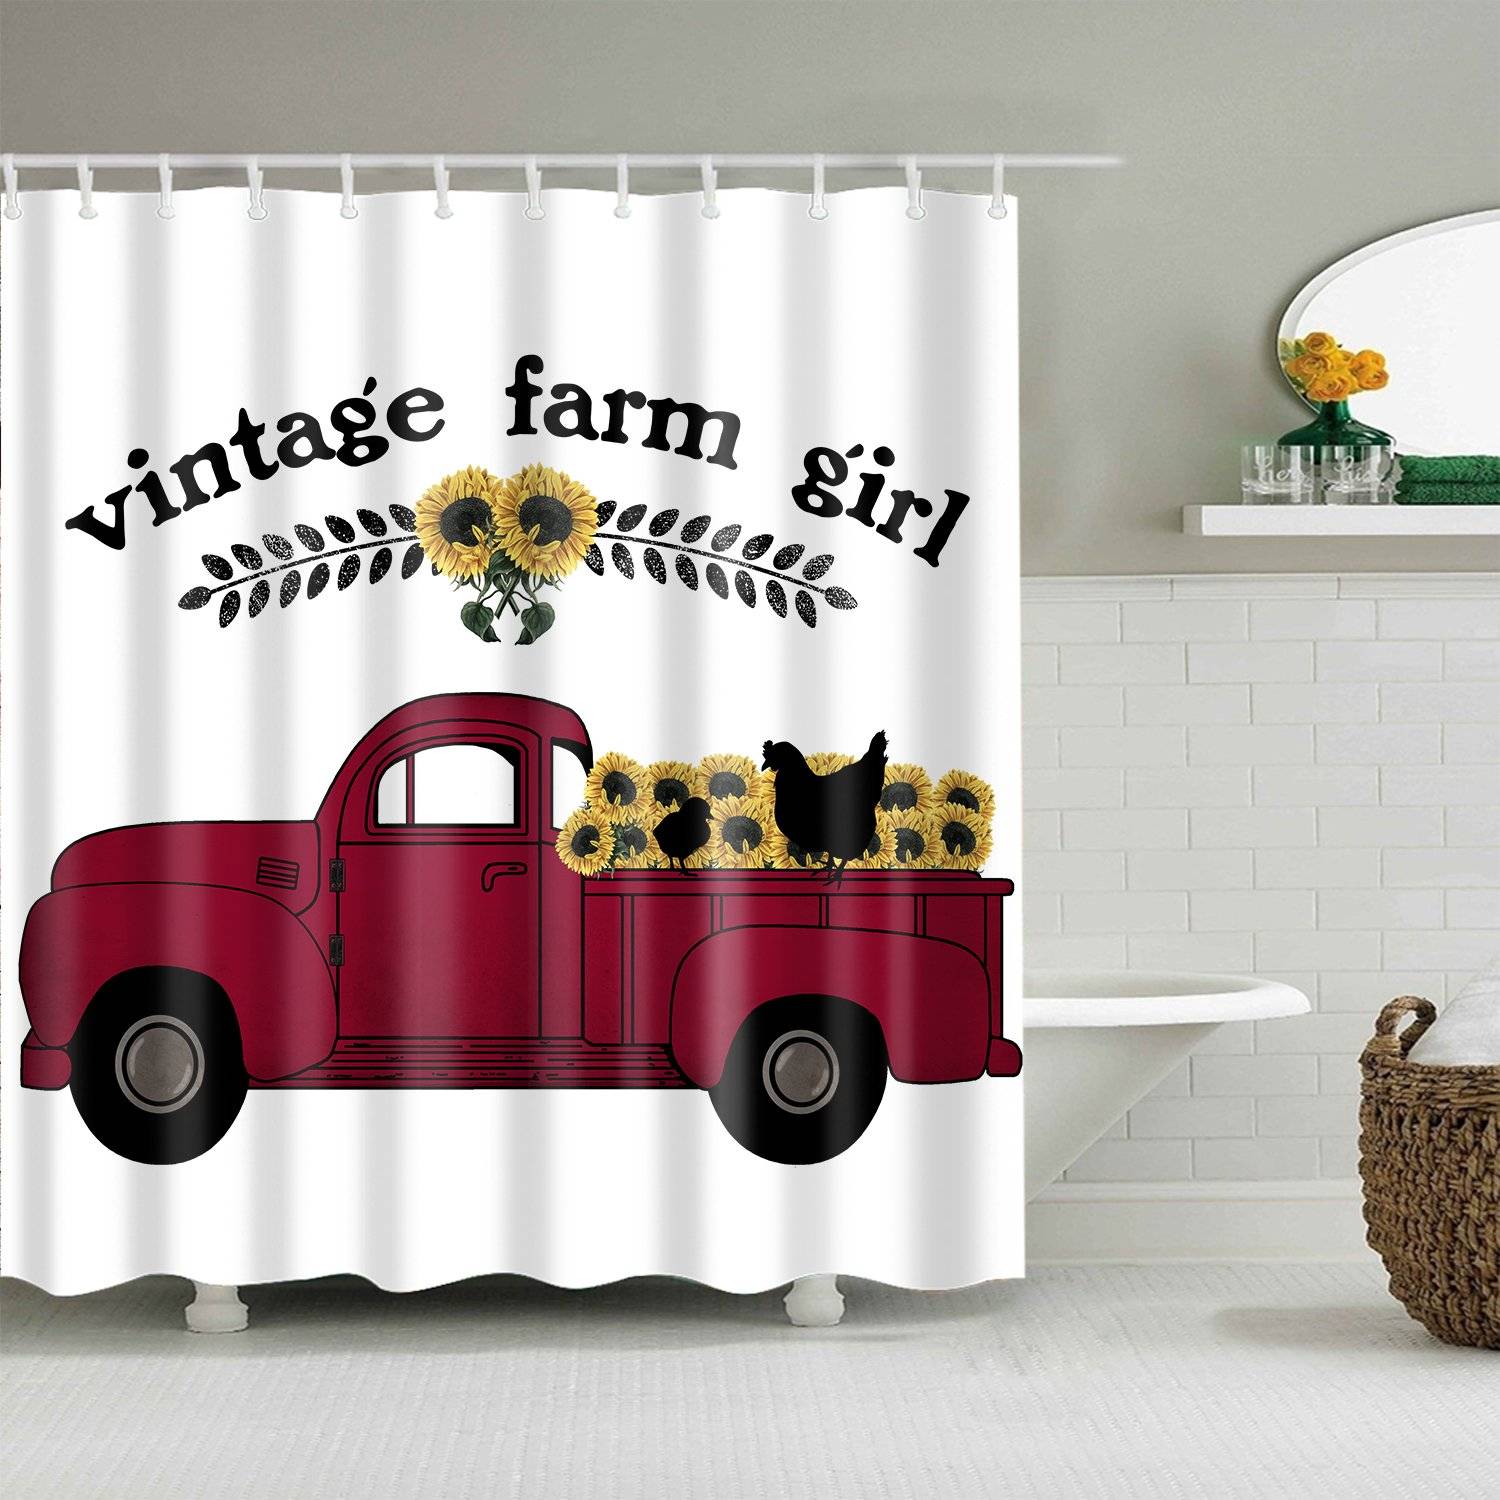 Antique Farmhouse Sunflower Shower Curtain Hooks